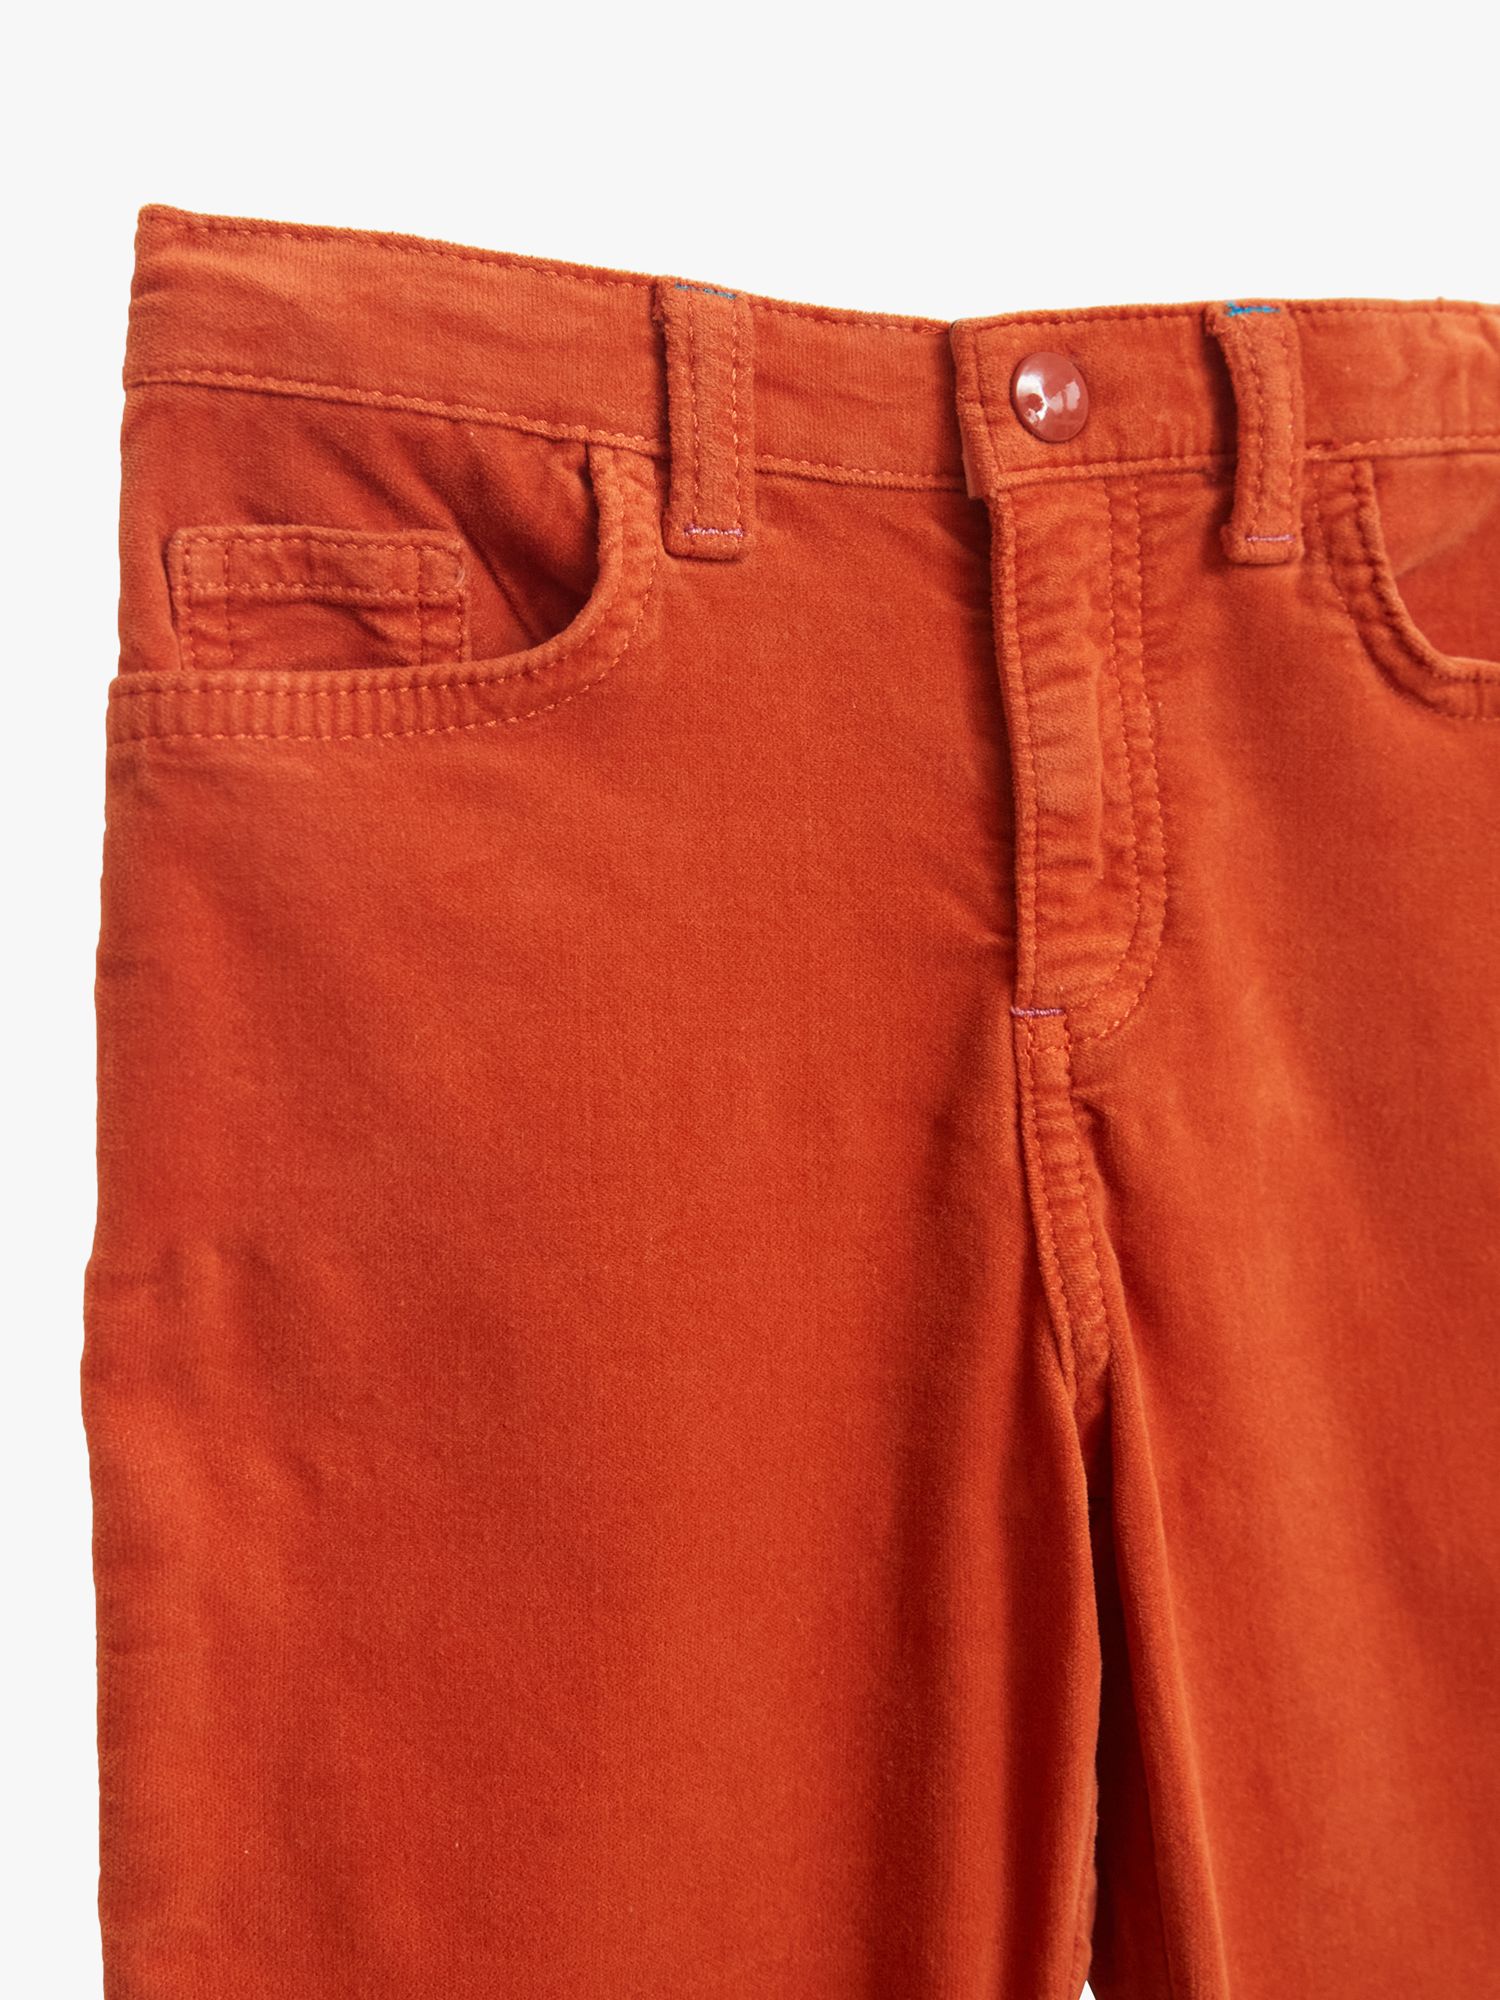 White Stuff Boys' Coen Cord Trousers, Orange